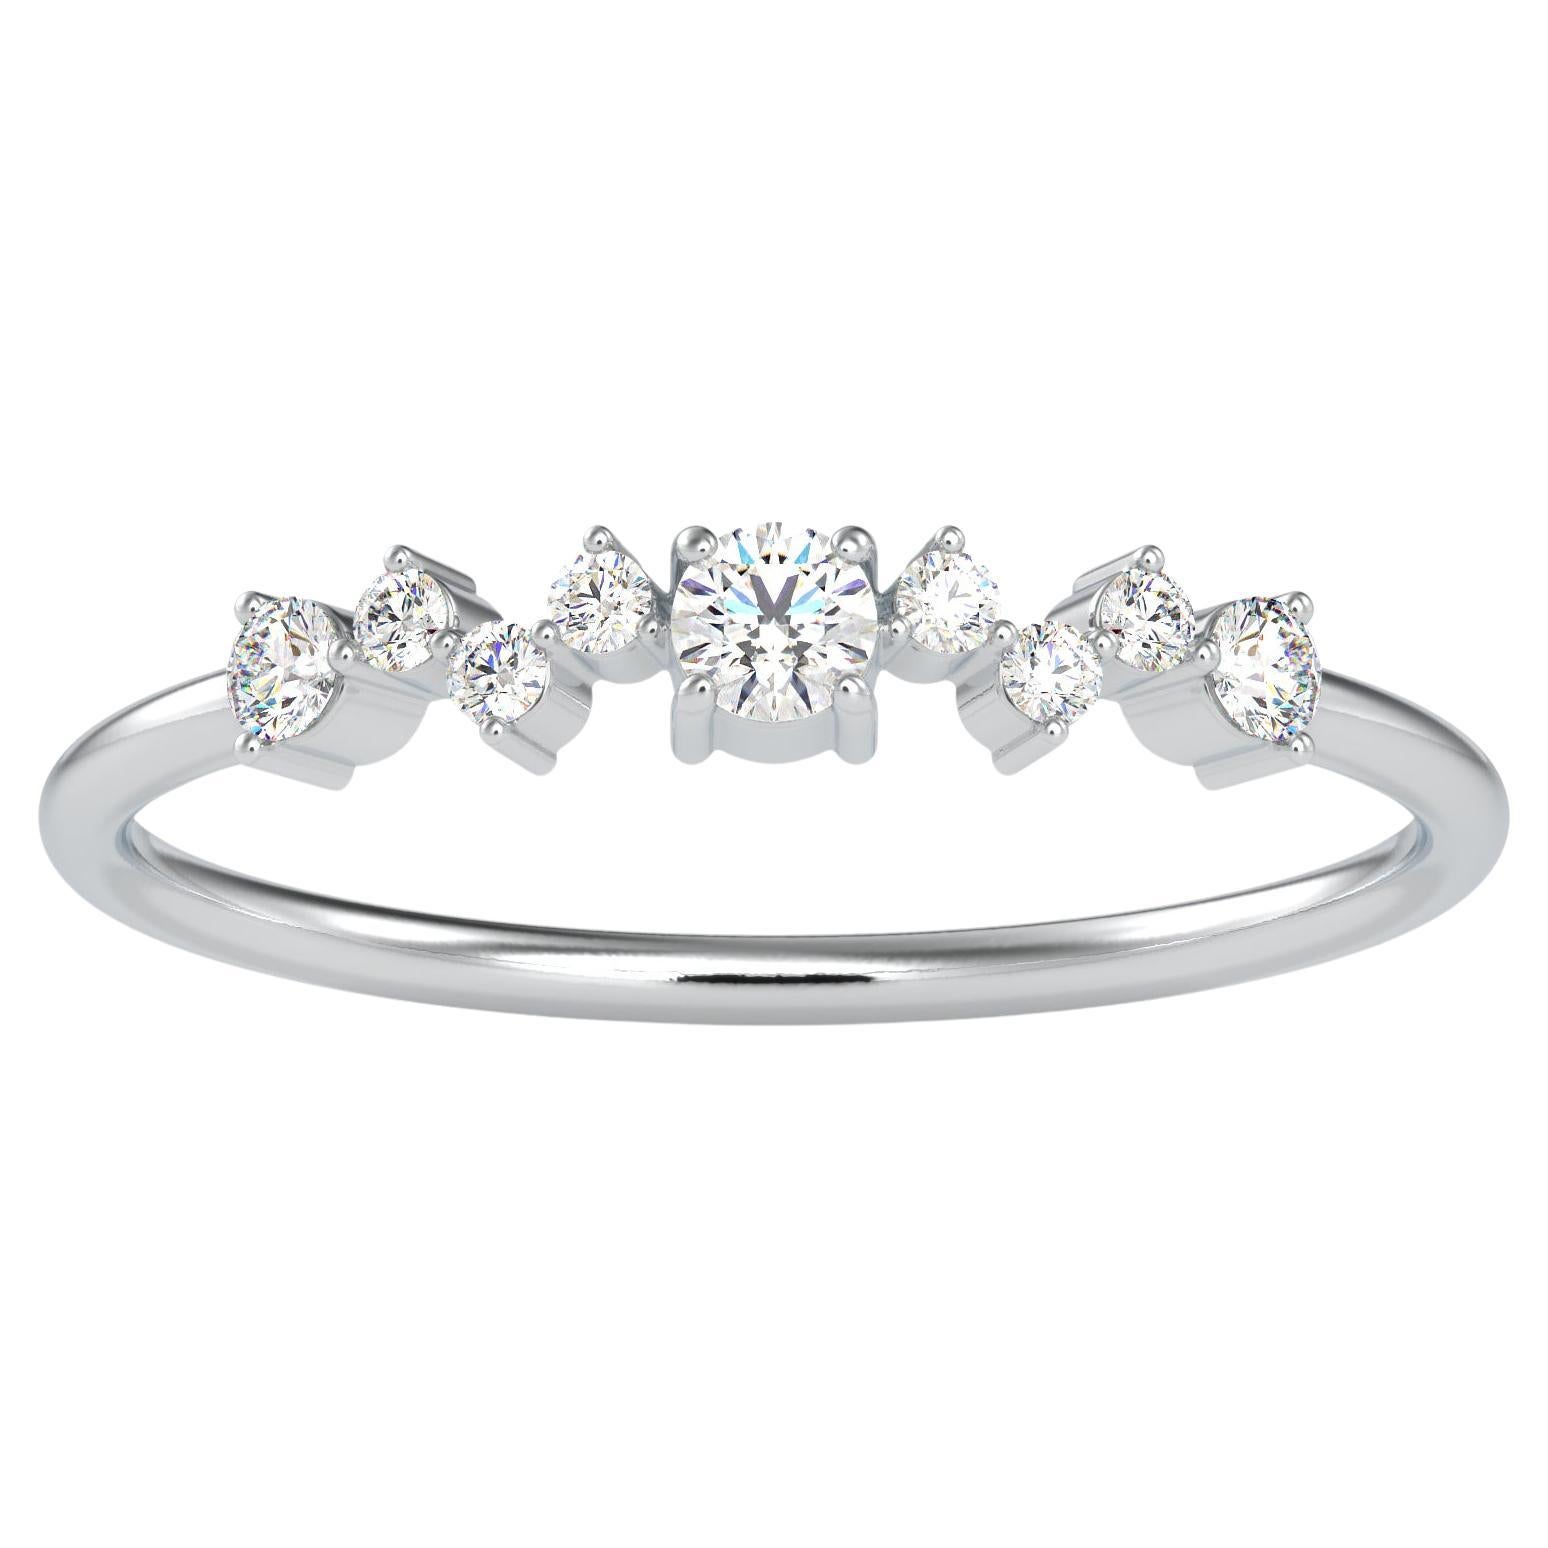 0.11 Carat Diamond 14K White Gold Ring For Sale